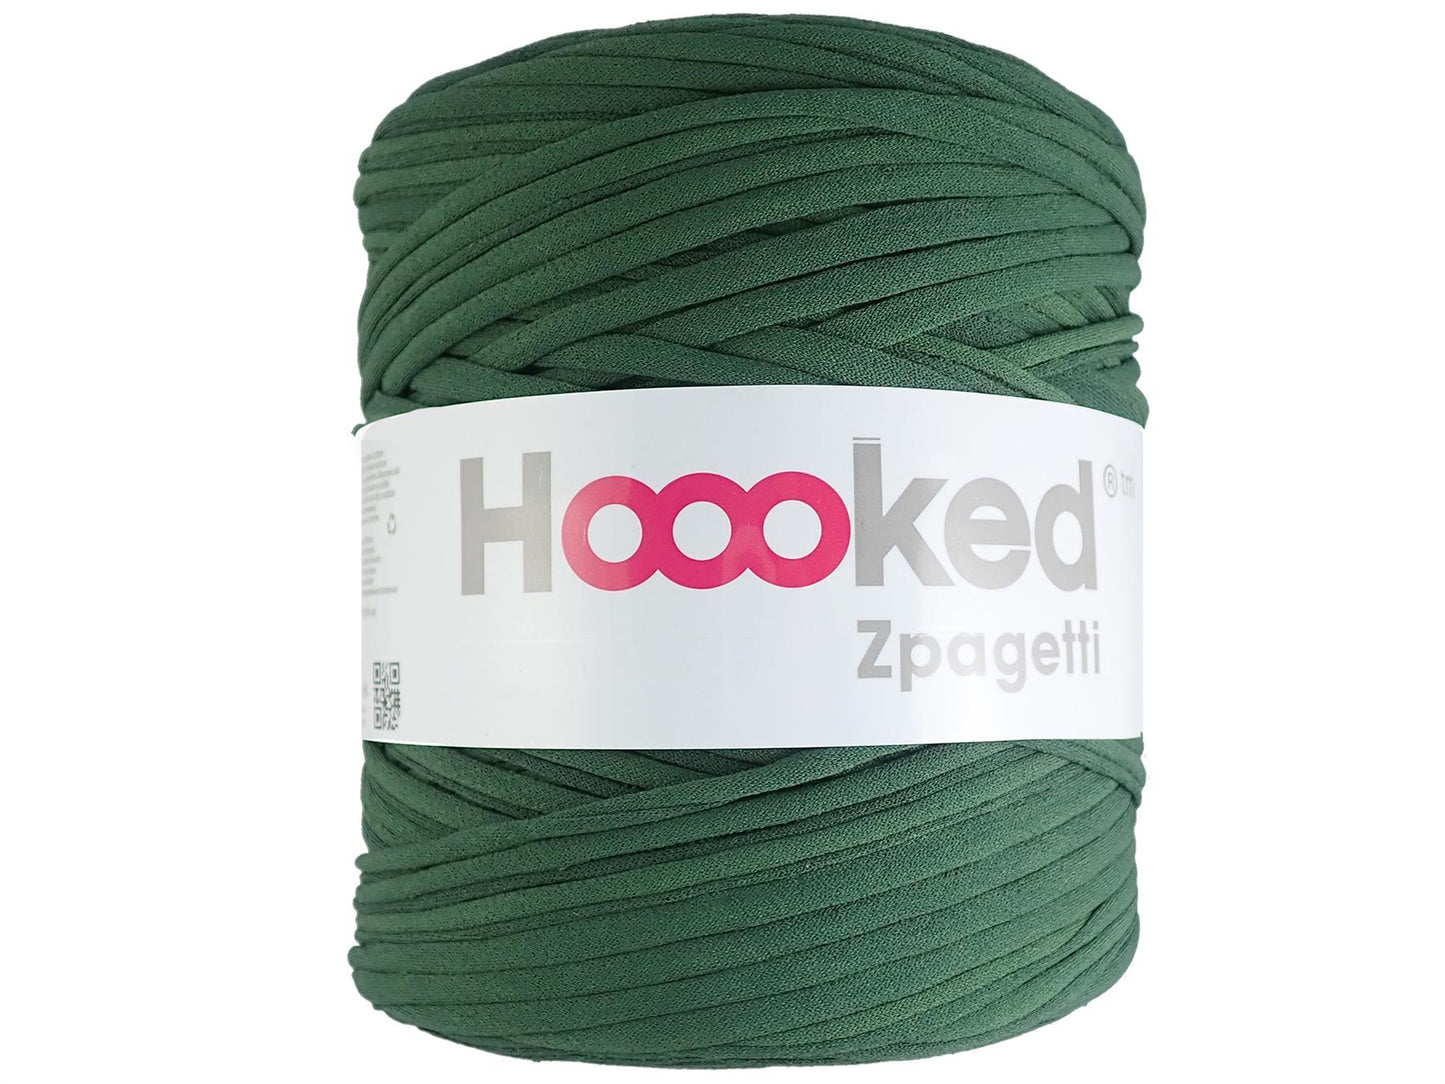 Hoooked Zpagetti Dark Green Cotton T-Shirt Yarn - 120M 700g